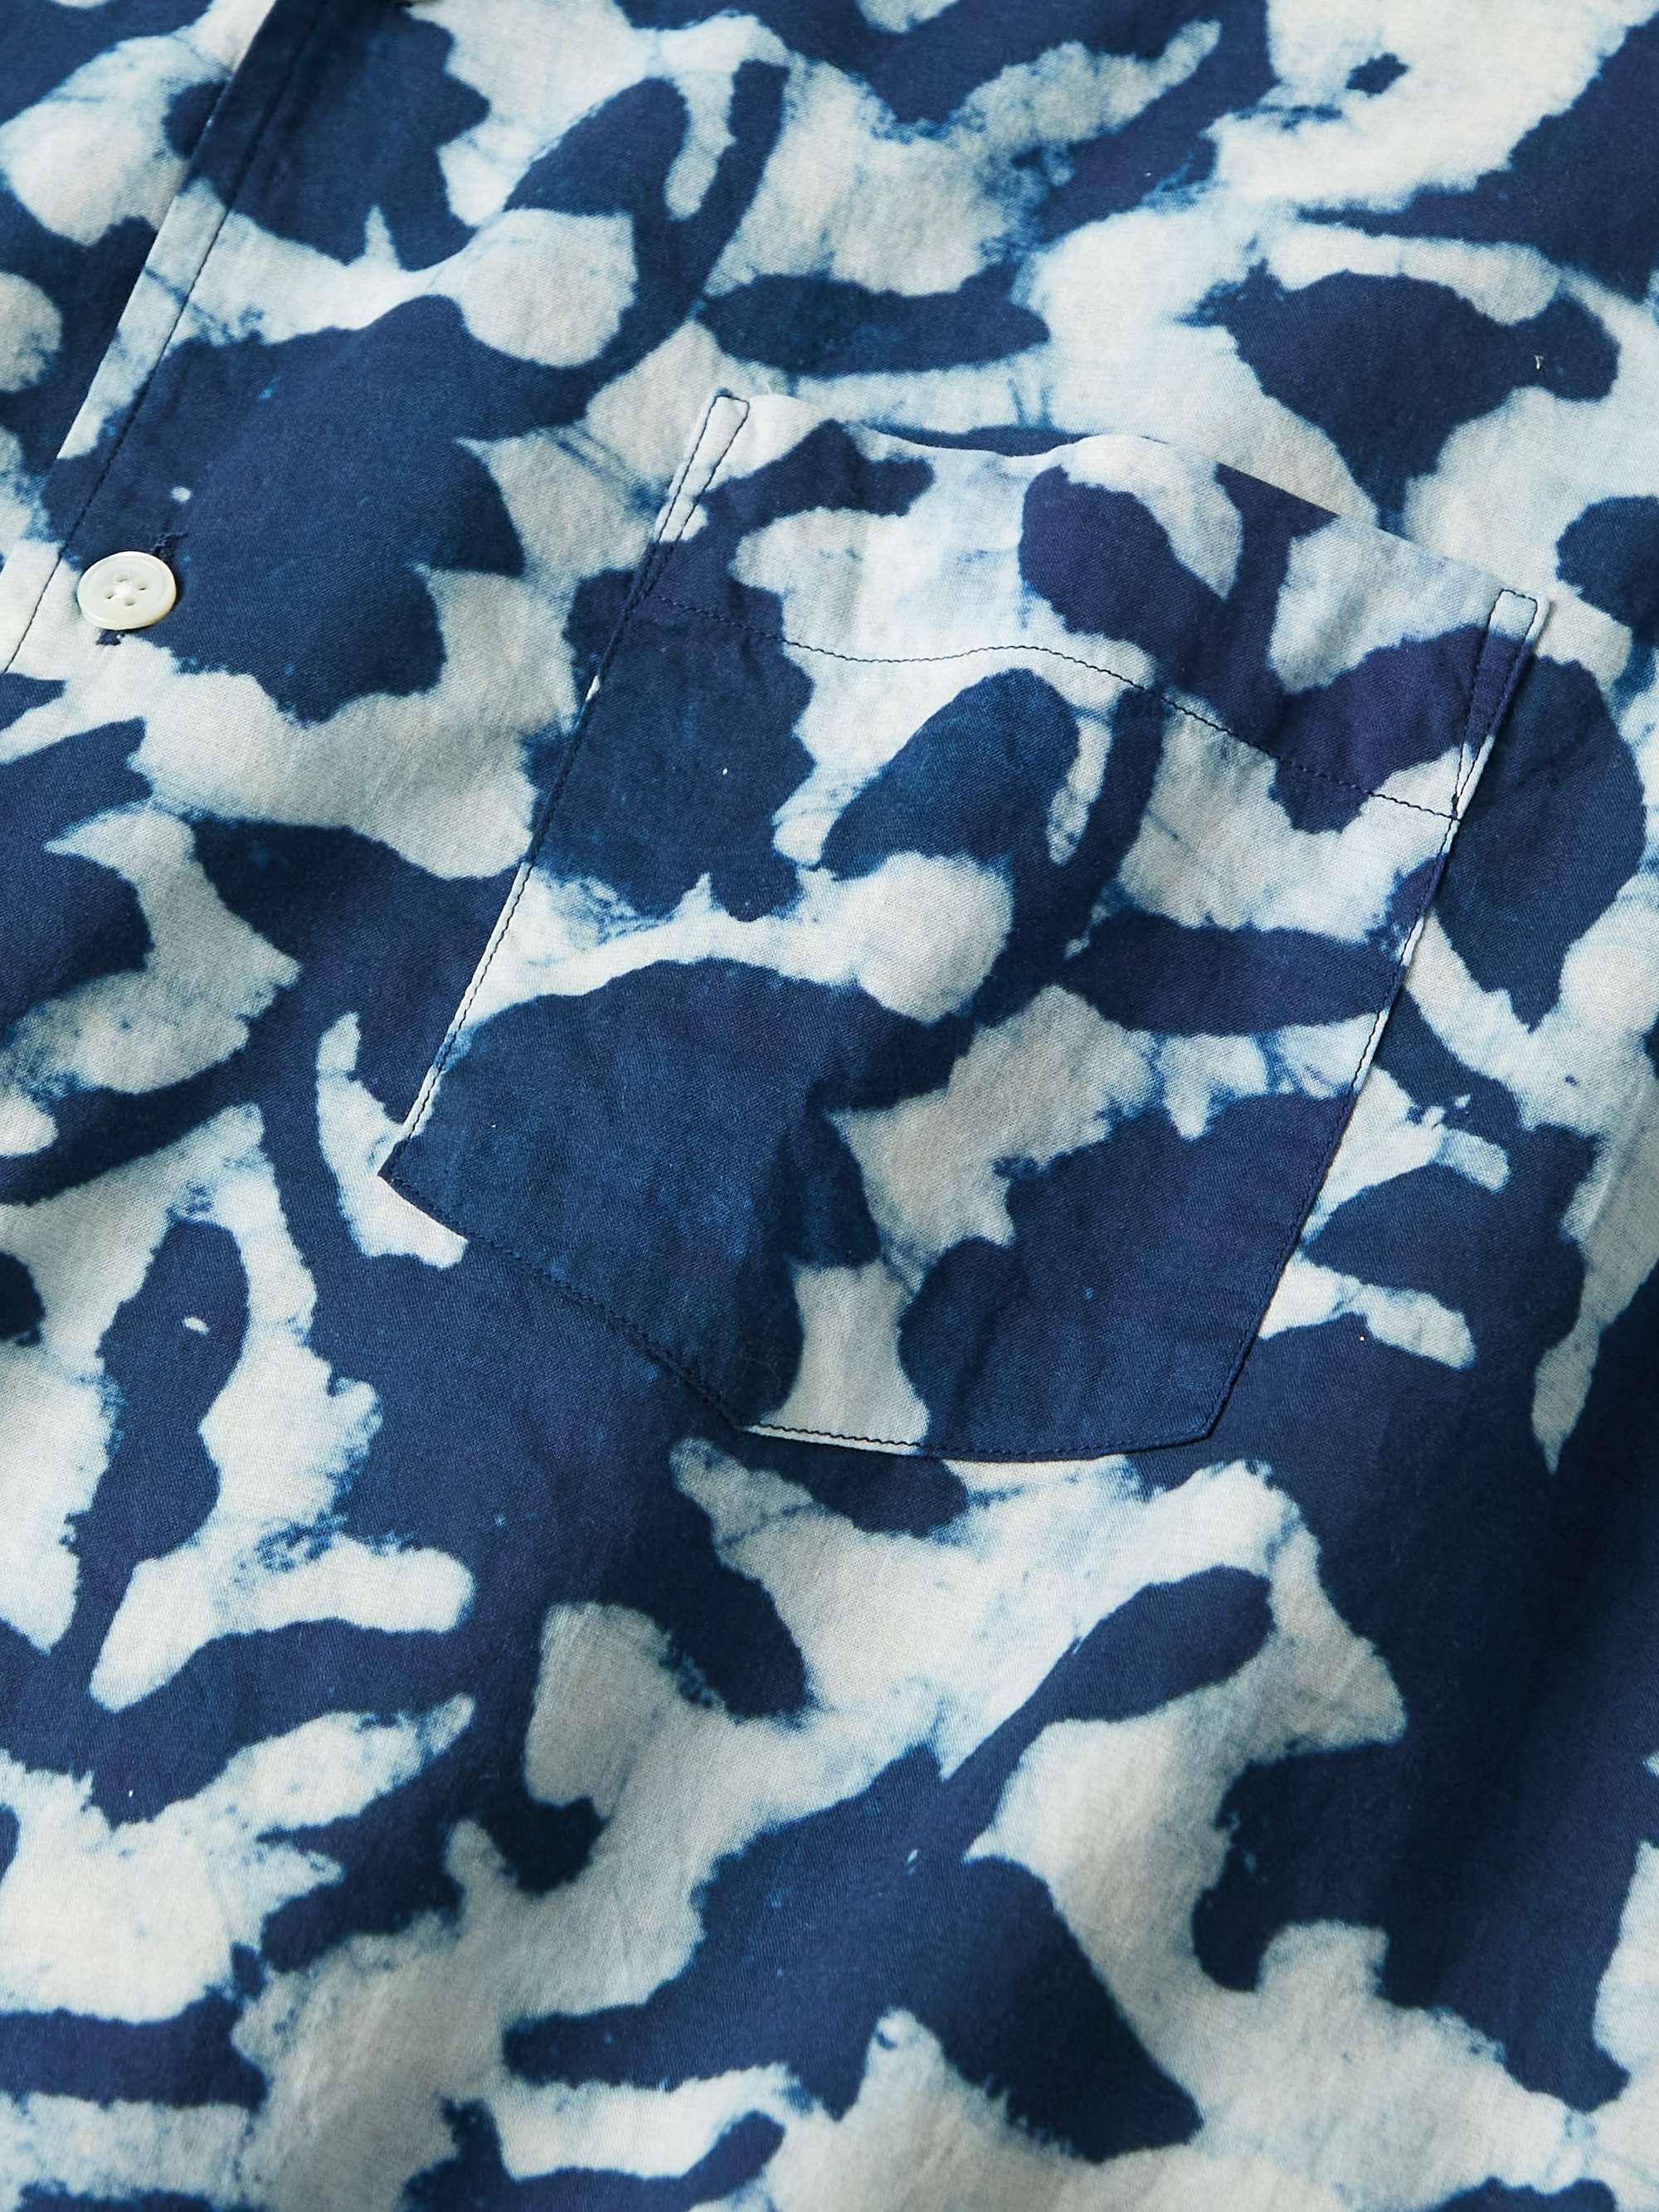 HARTFORD Palm Mc Pat Convertible-Collar Printed Cotton-Voile Shirt